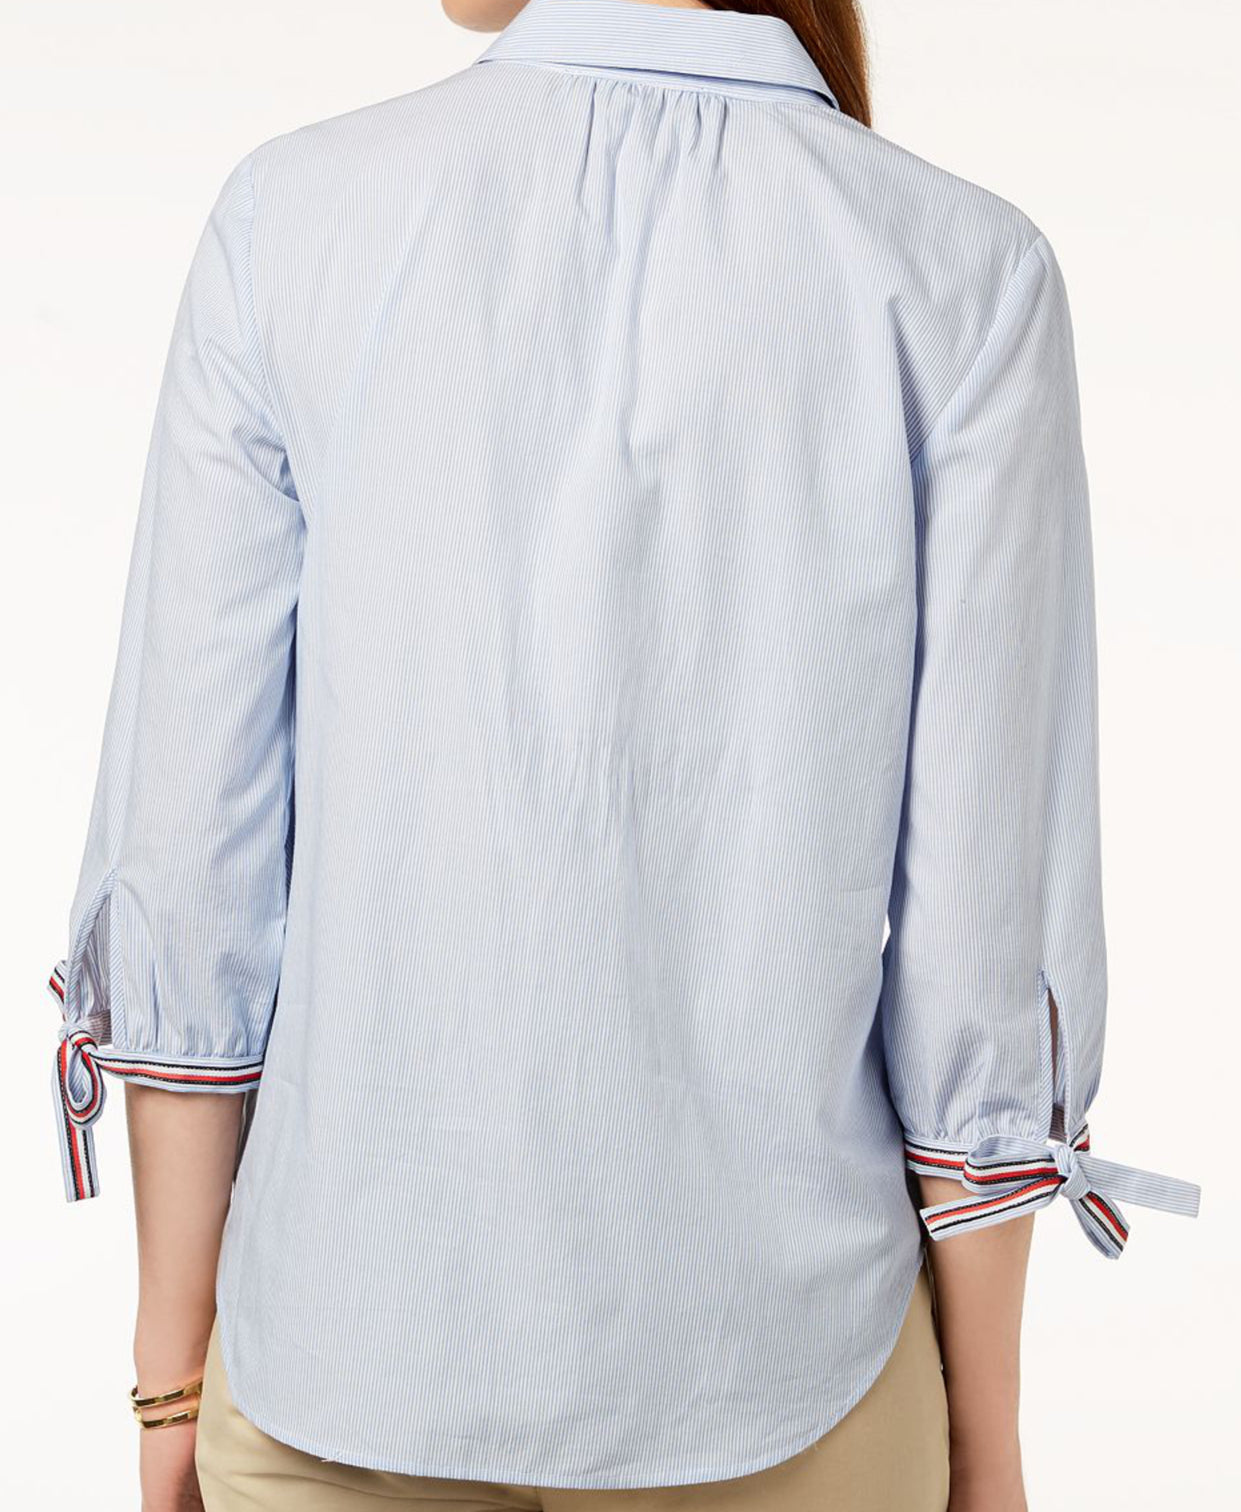 Tommy Hilfiger Womens Cotton Contrast Trim Striped Shirt